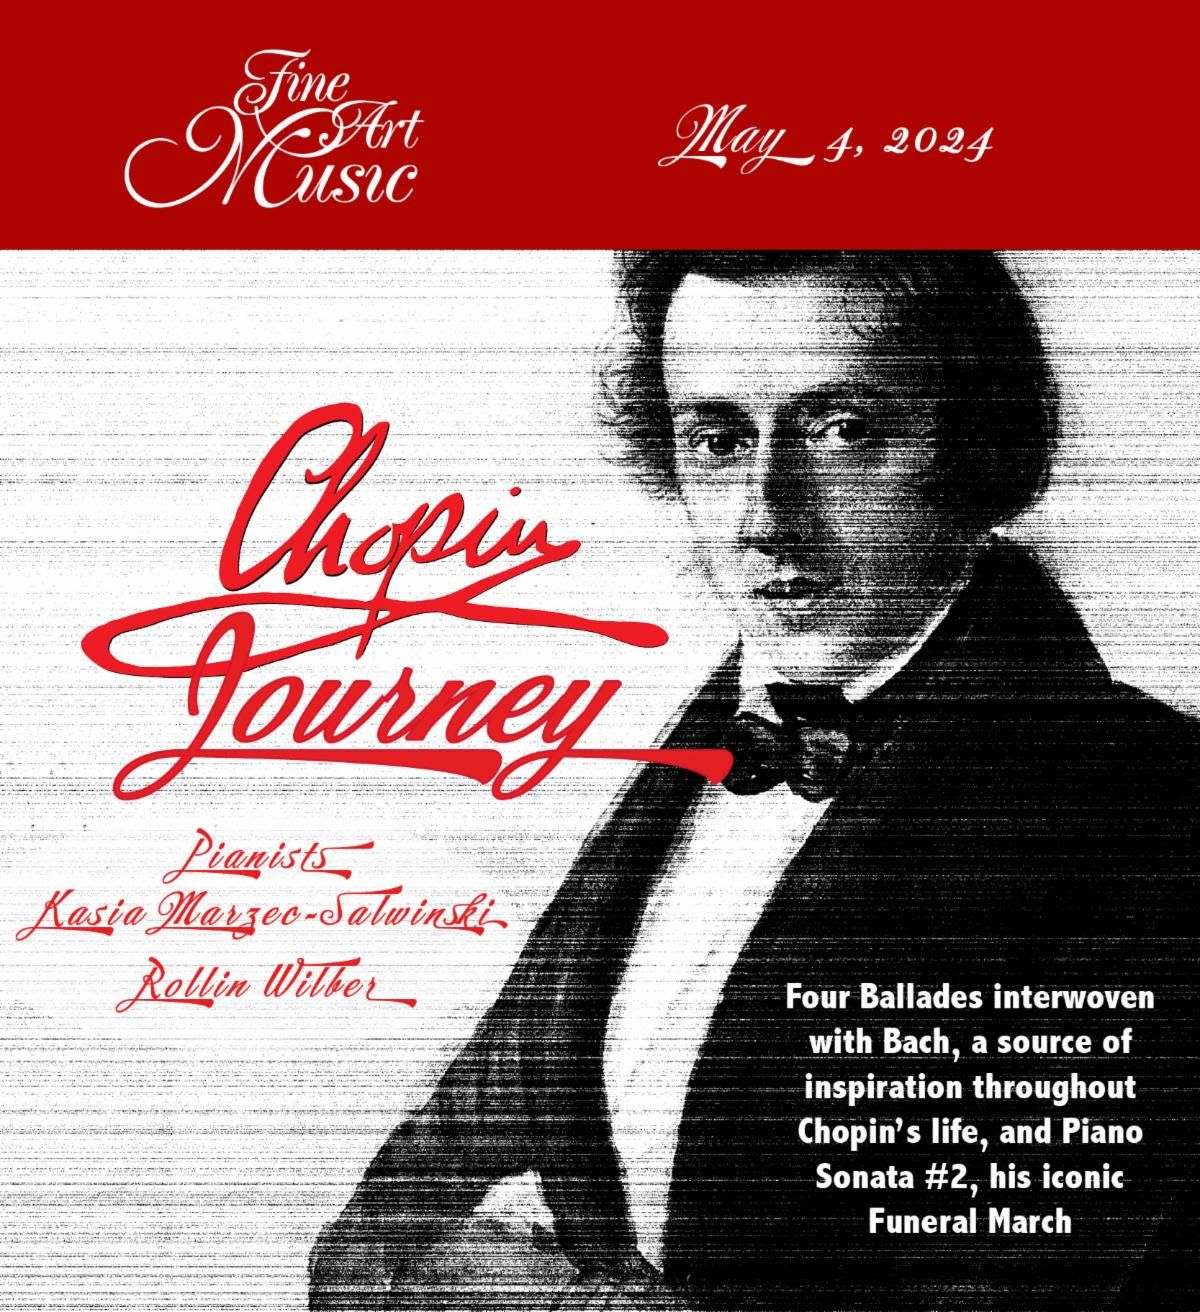 Chopin Journey